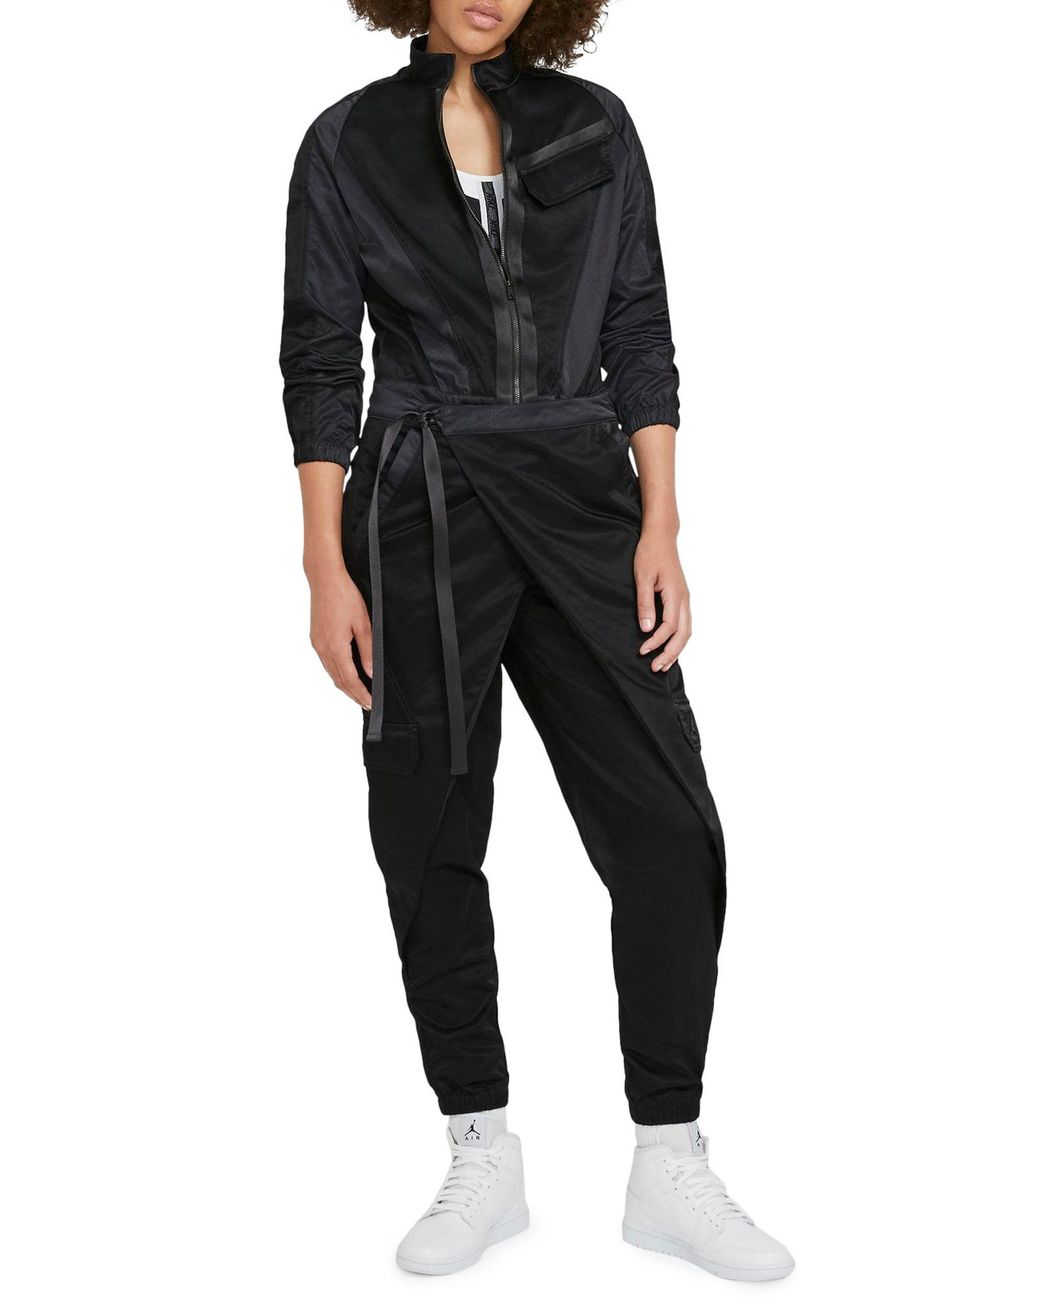 Nike Synthetic Future Primal Nylon Flight Suit in Black - Lyst